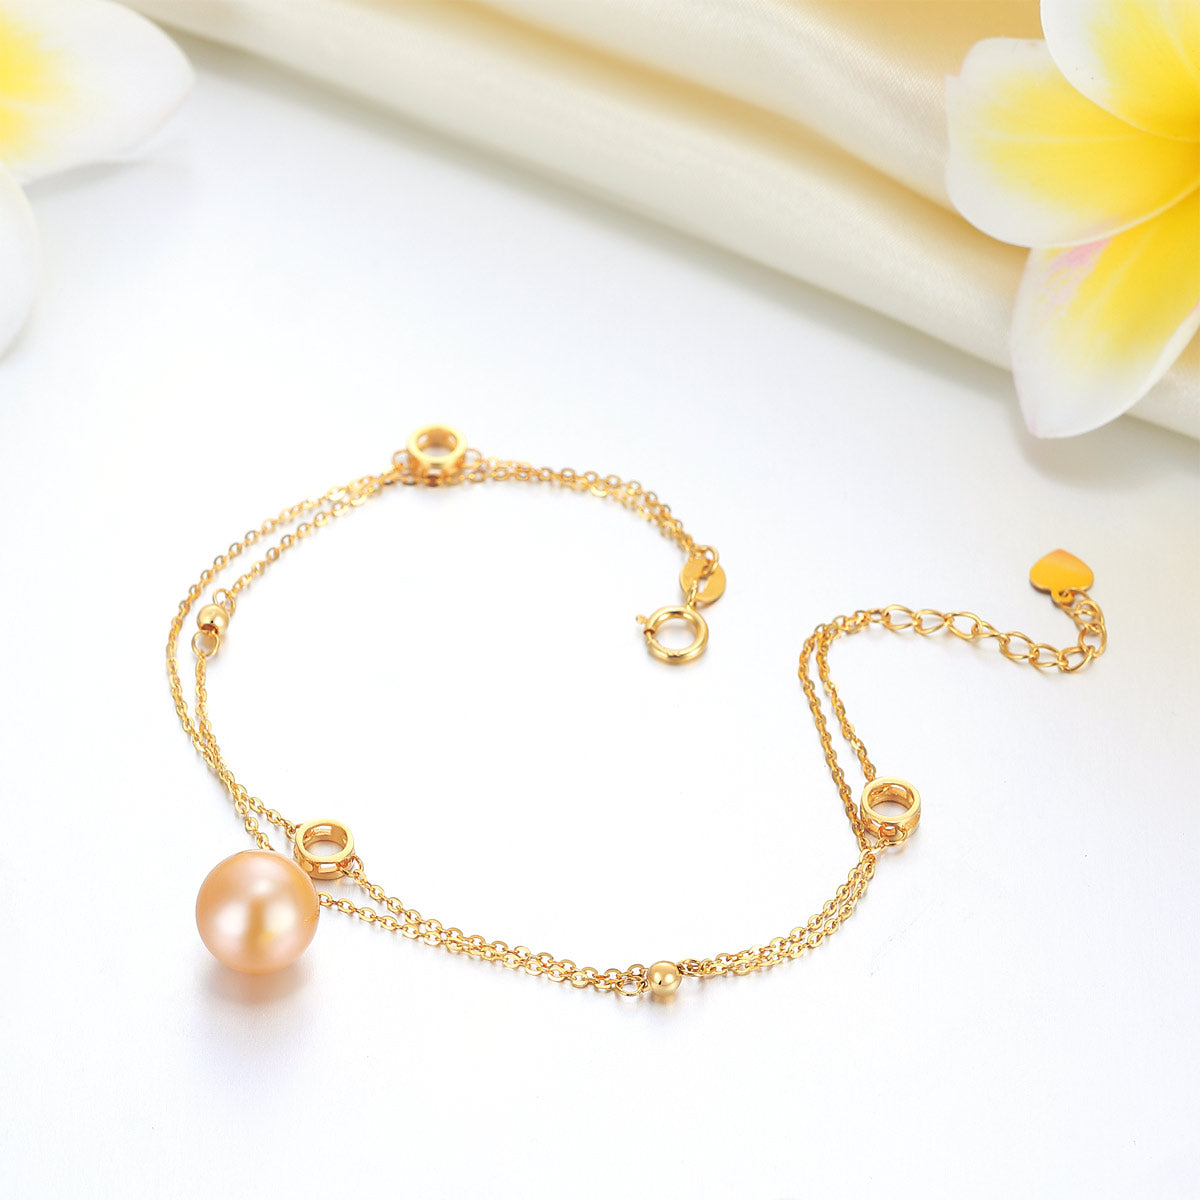 18K黄金 南洋金珍珠(9-10 mm) Pearl Bracelet 手鍊鏈時尚優雅 - 精品珠寶